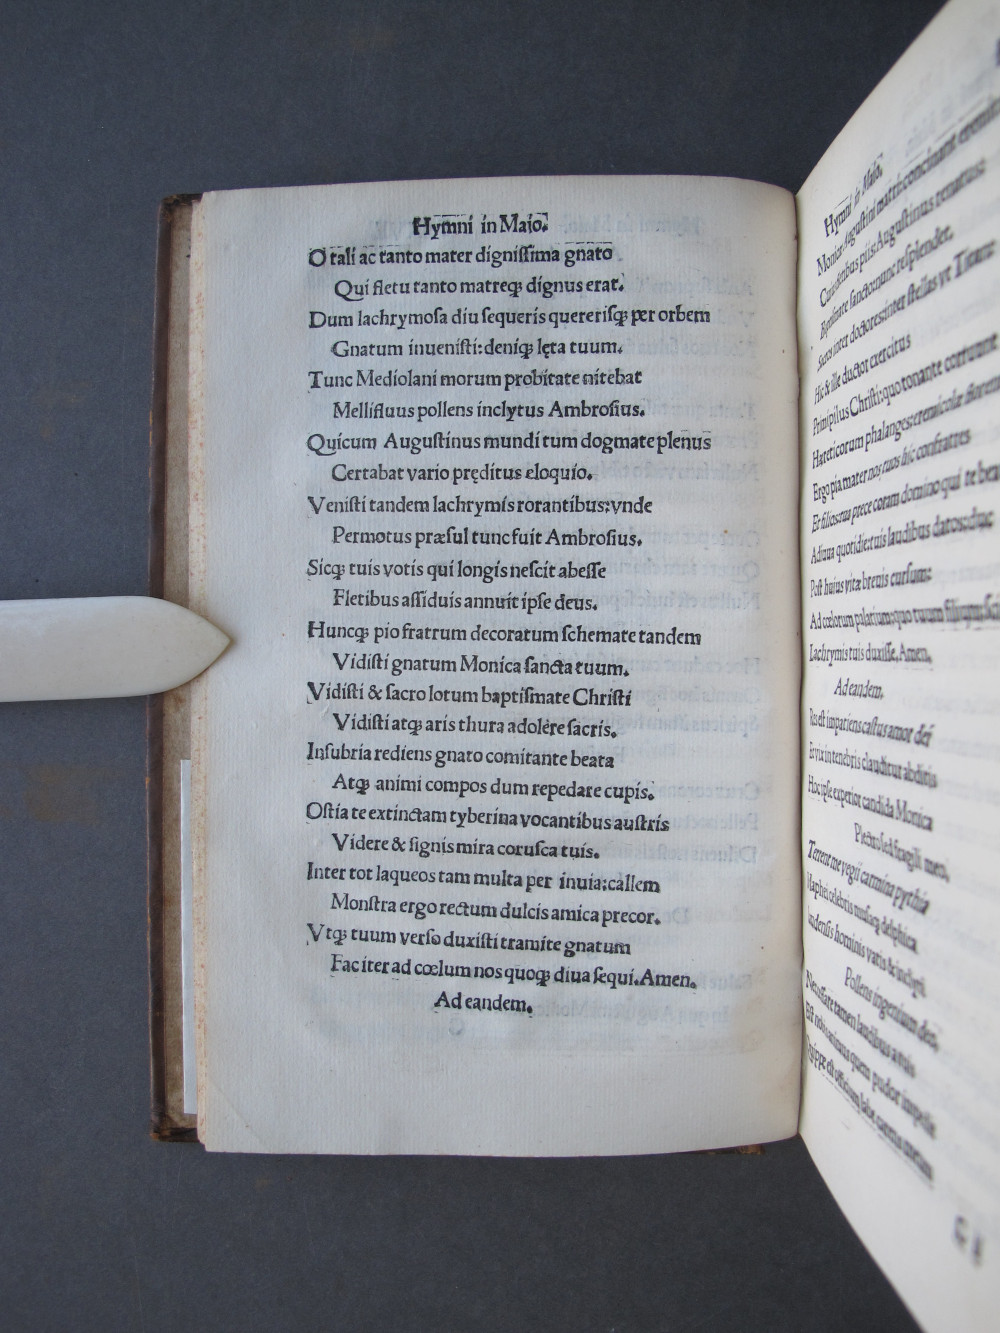 Folio 17 verso